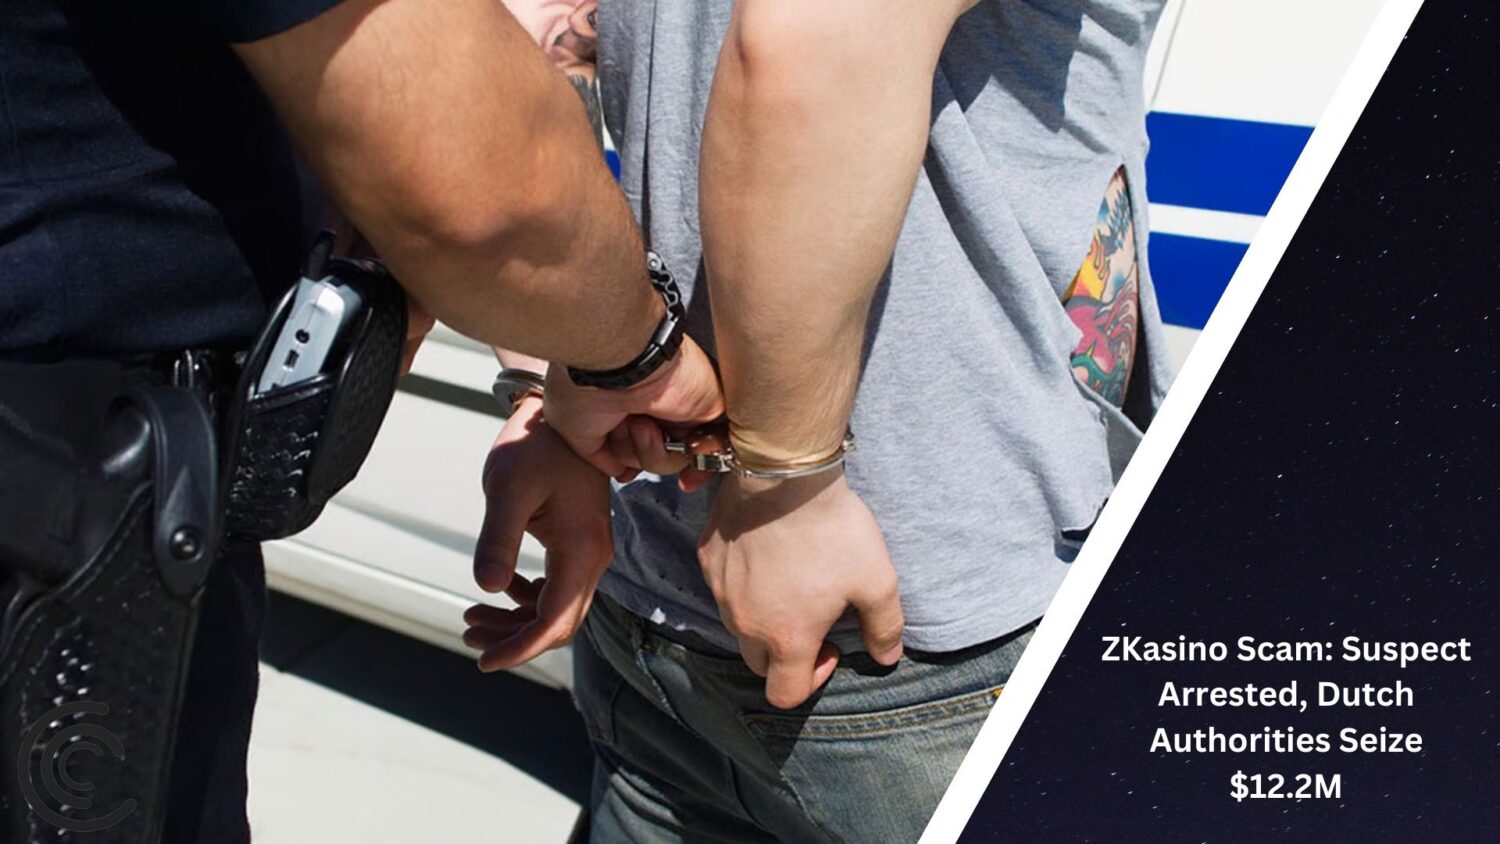 Zkasino Scam: Suspect Arrested, Dutch Authorities Seize $12.2M